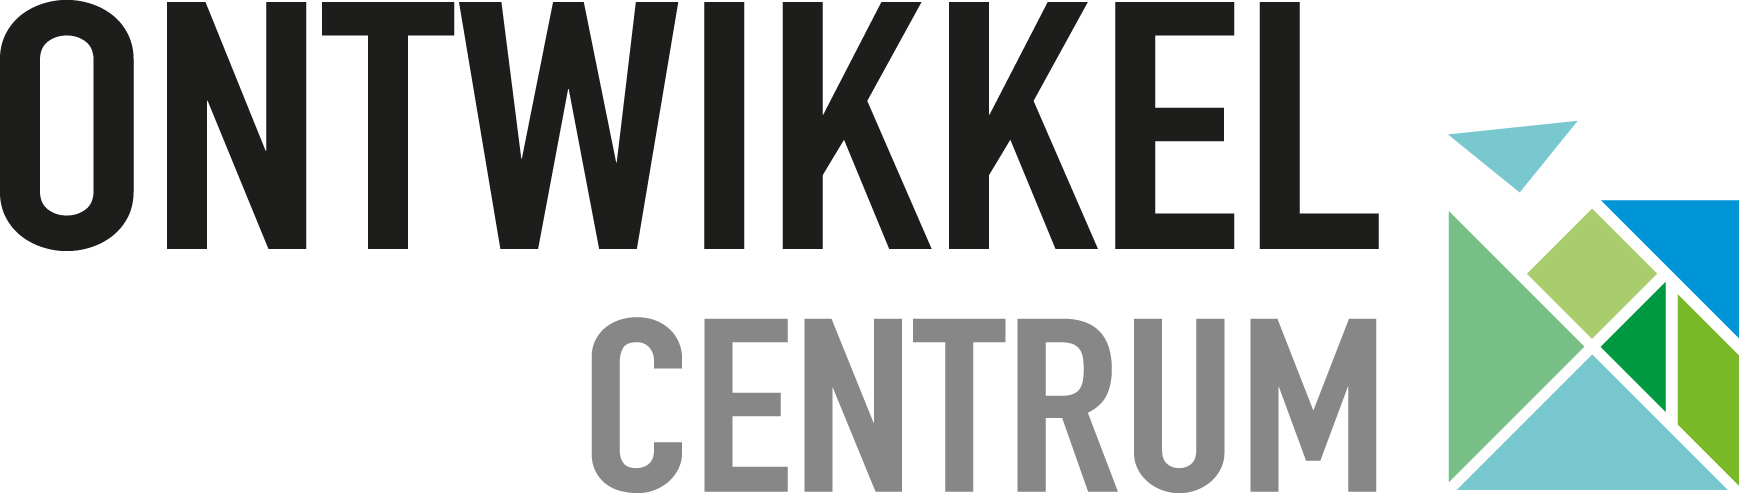 Ontwikkelcentrum logo